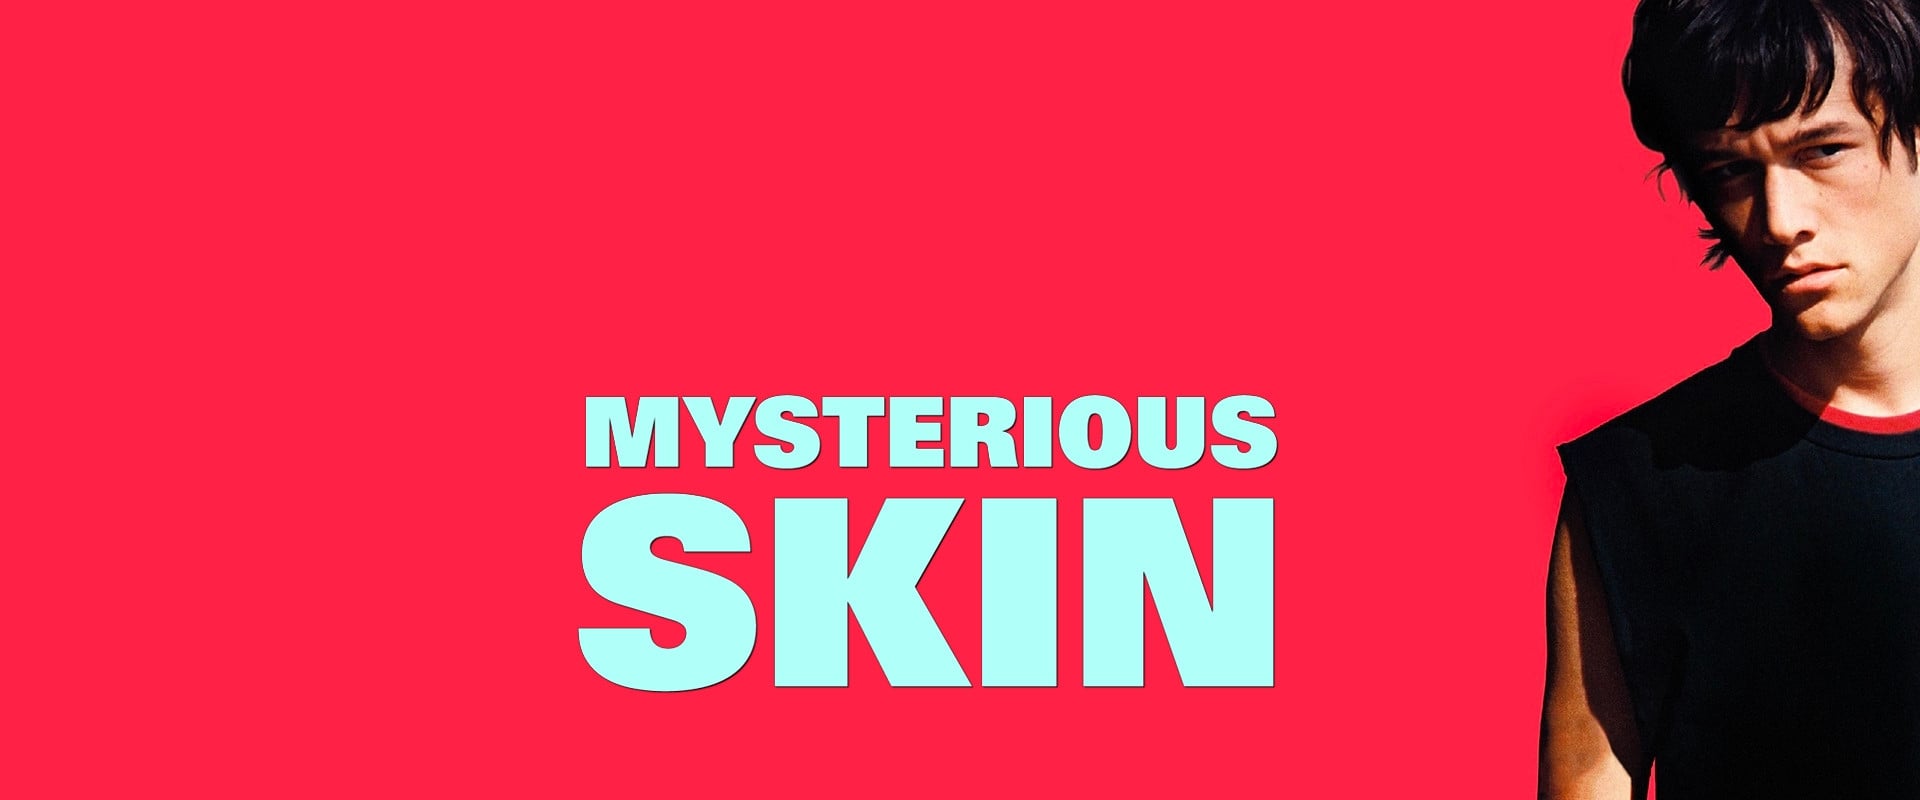 Mysterious Skin (Oscura inocencia)